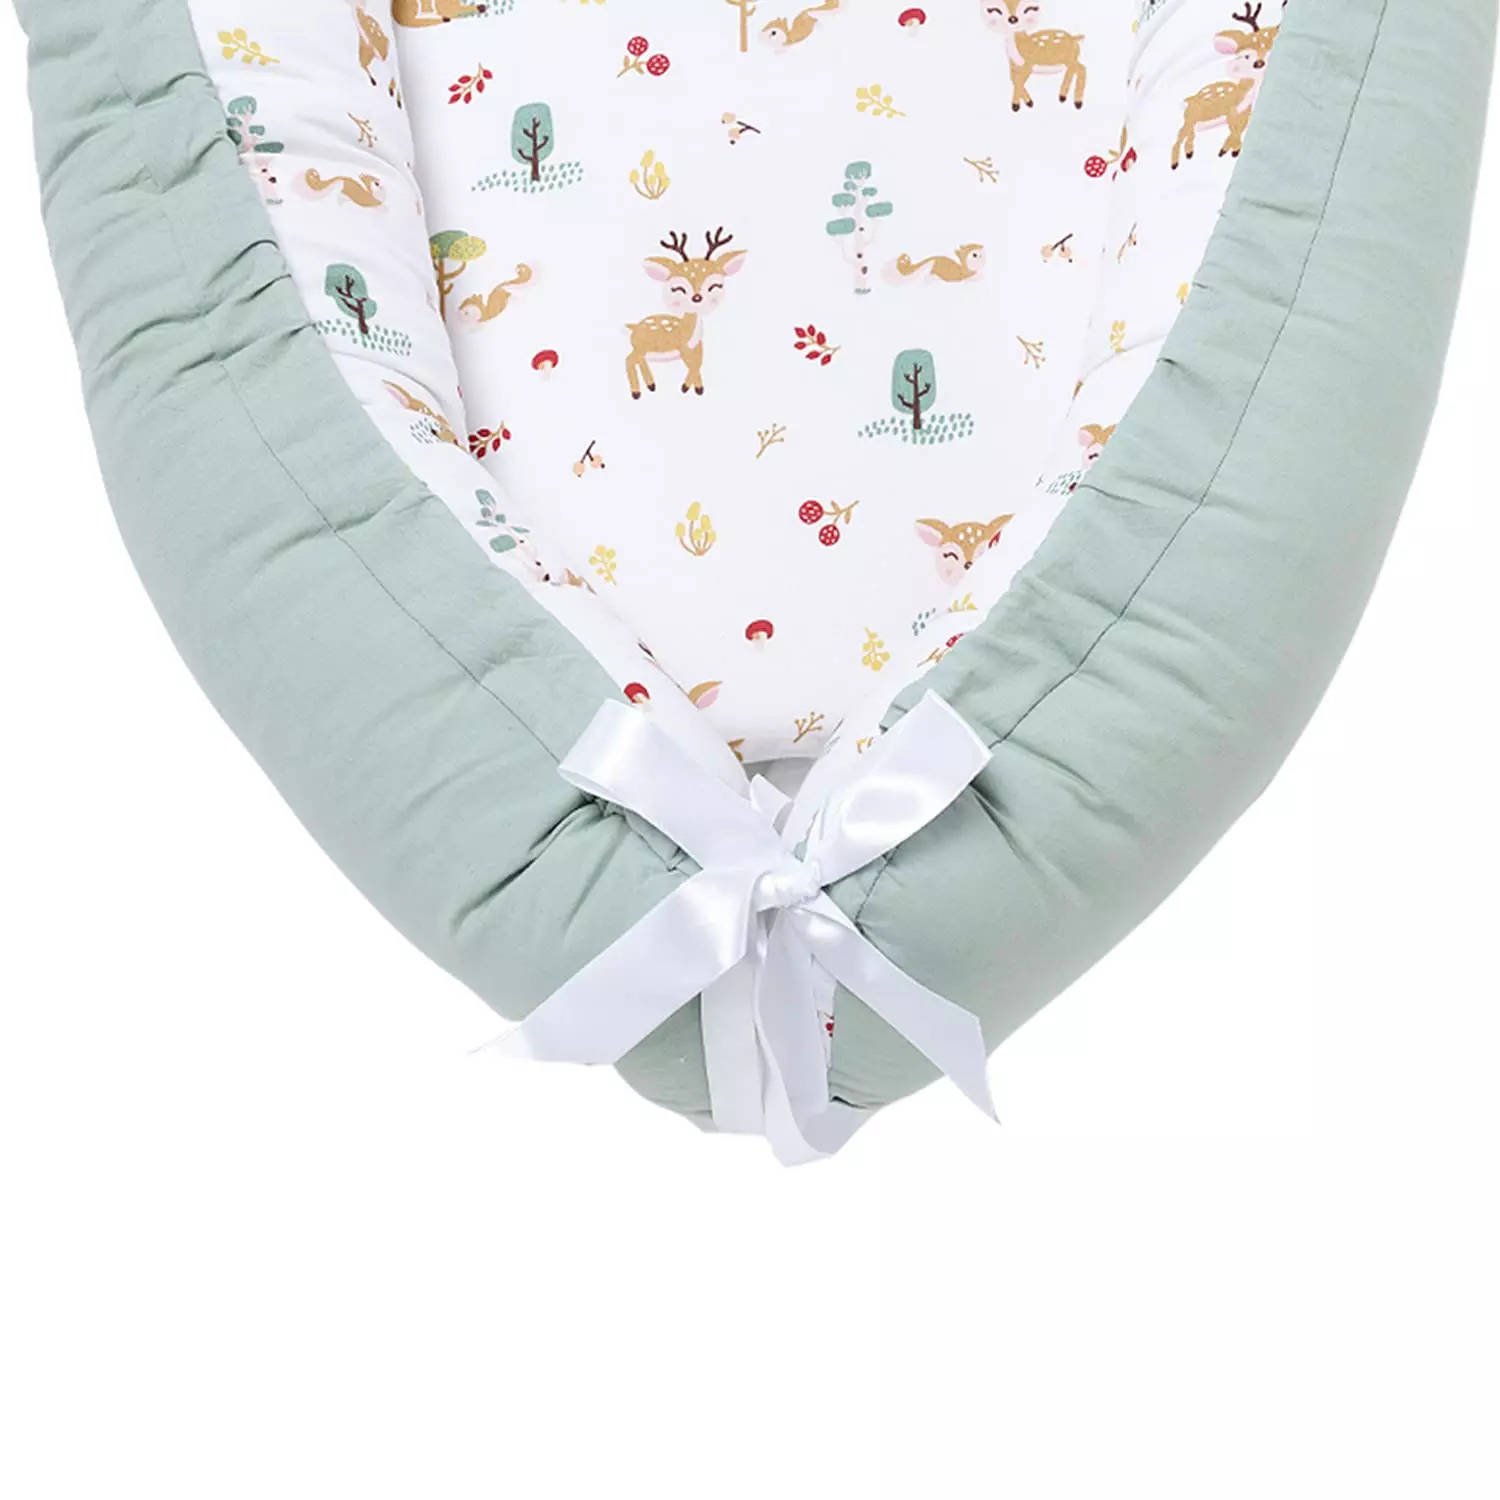 Top 10 comfortable newborn bedding sets for uninterrupted nap time:Image